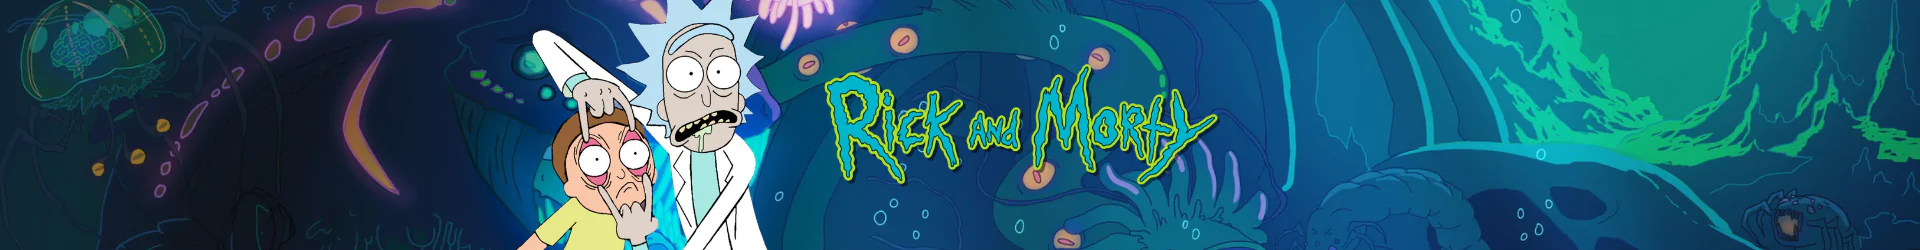 Rick and Morty münzen, plaketten banner